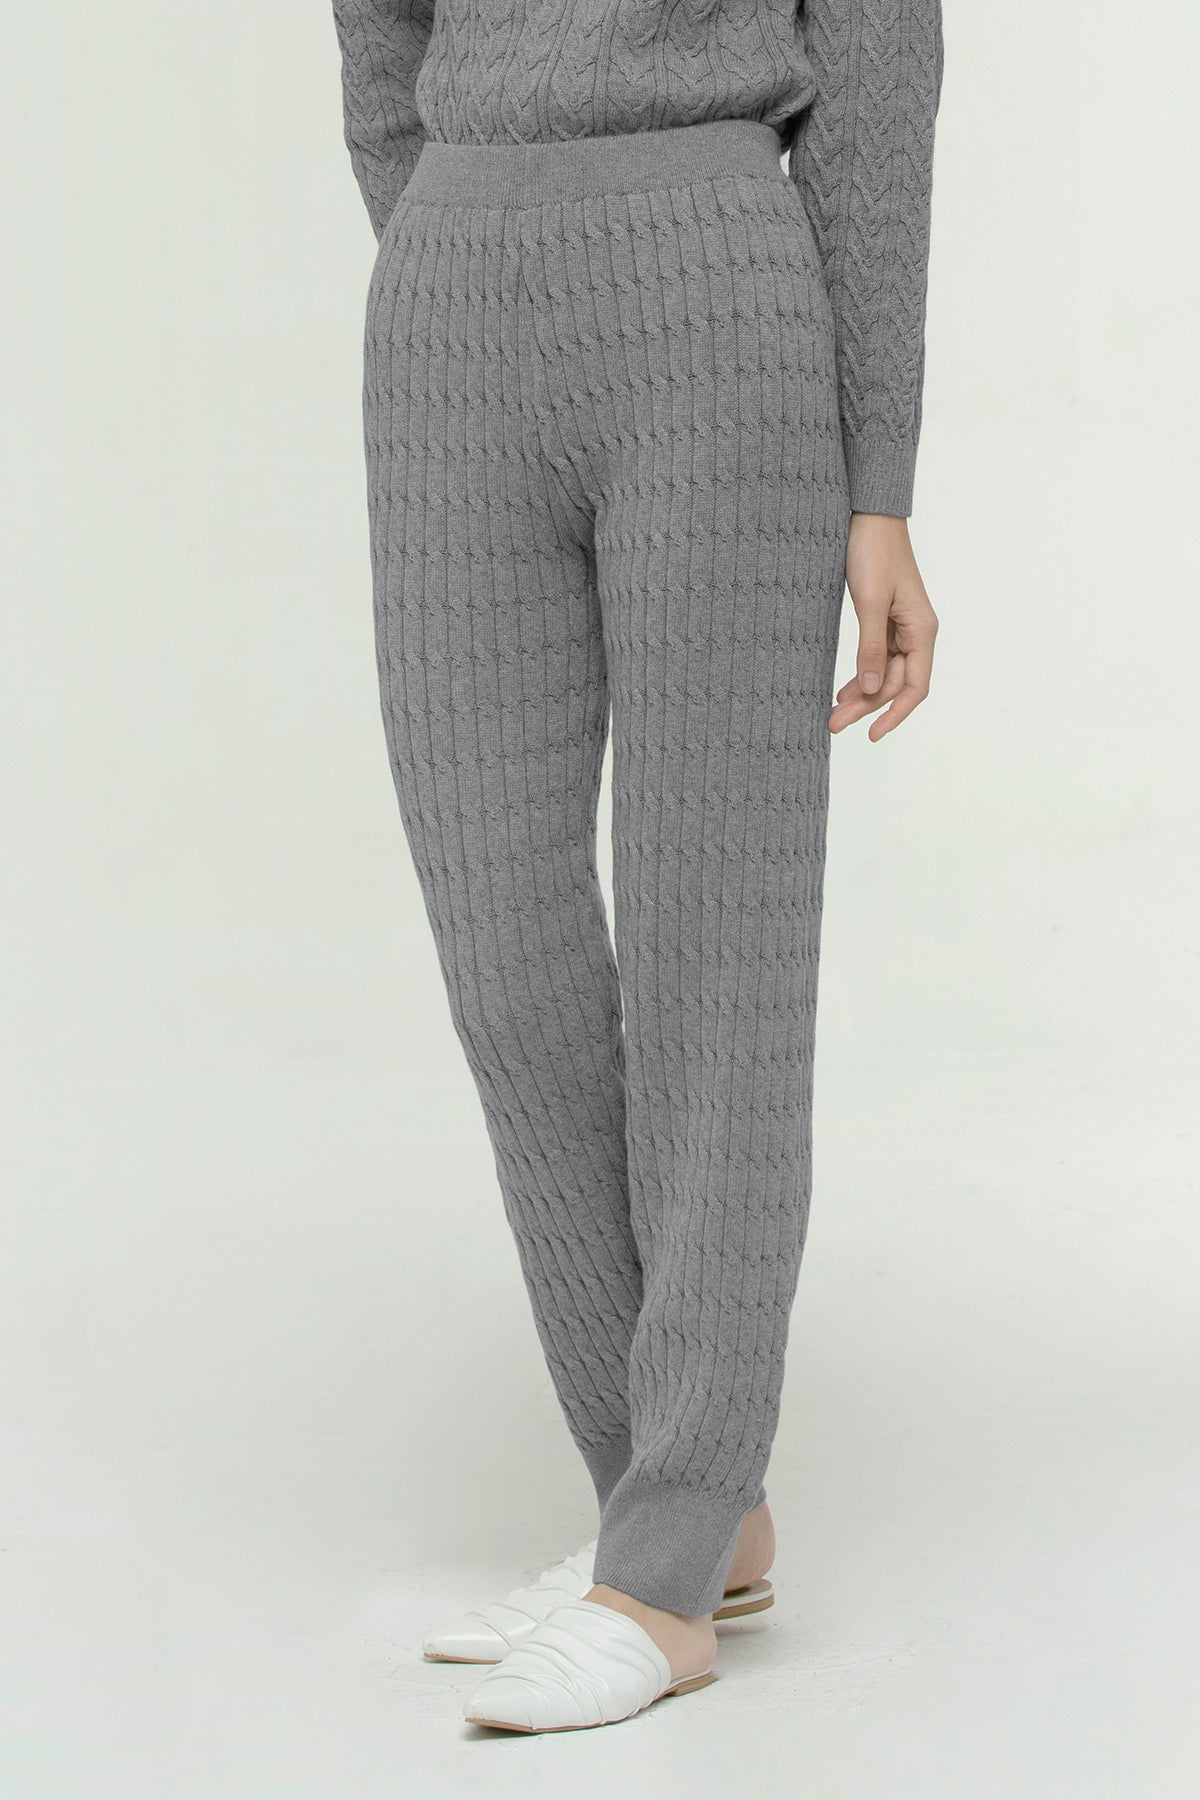 Grey Cable Knit Pants (1 Left)